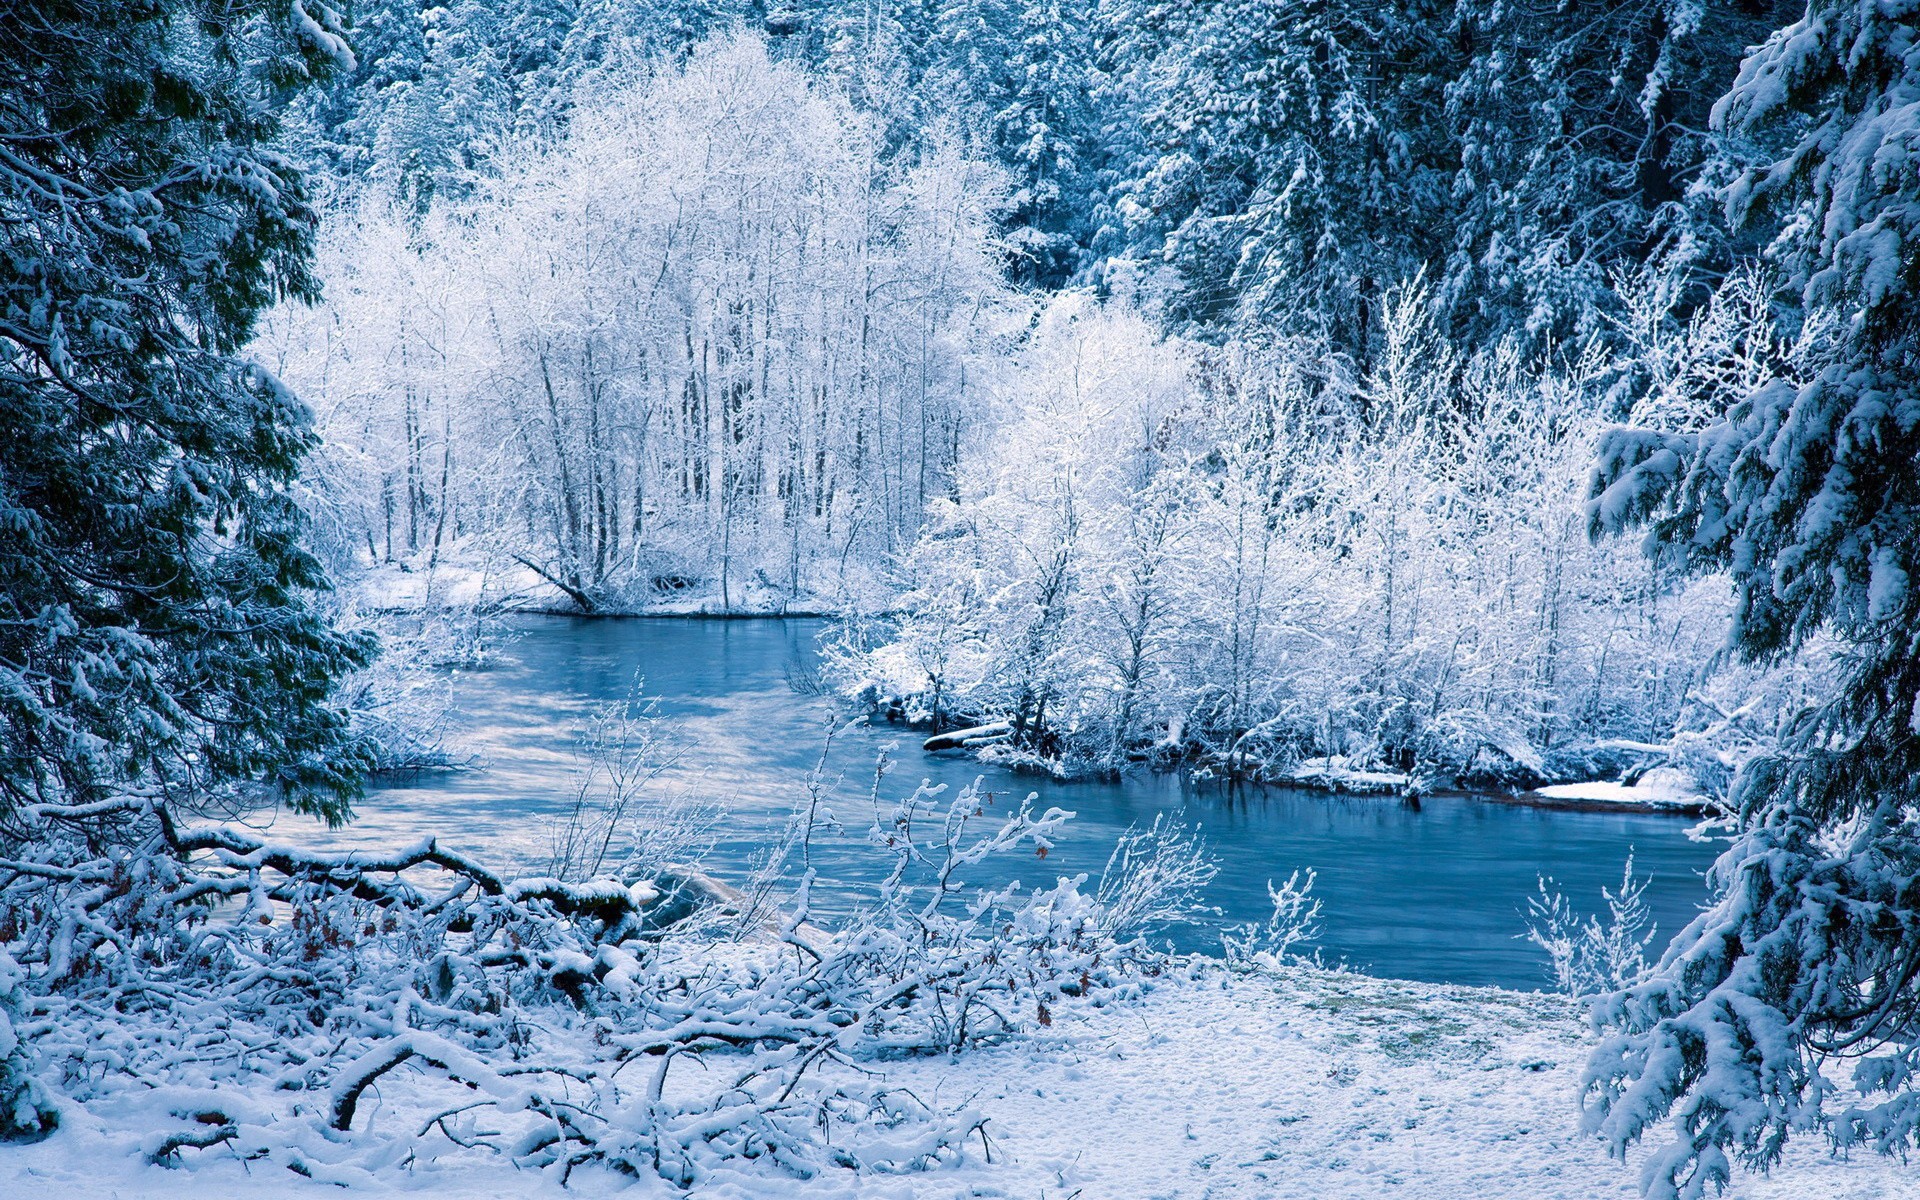 Amazing blue and white frozen nature - Cold winter season